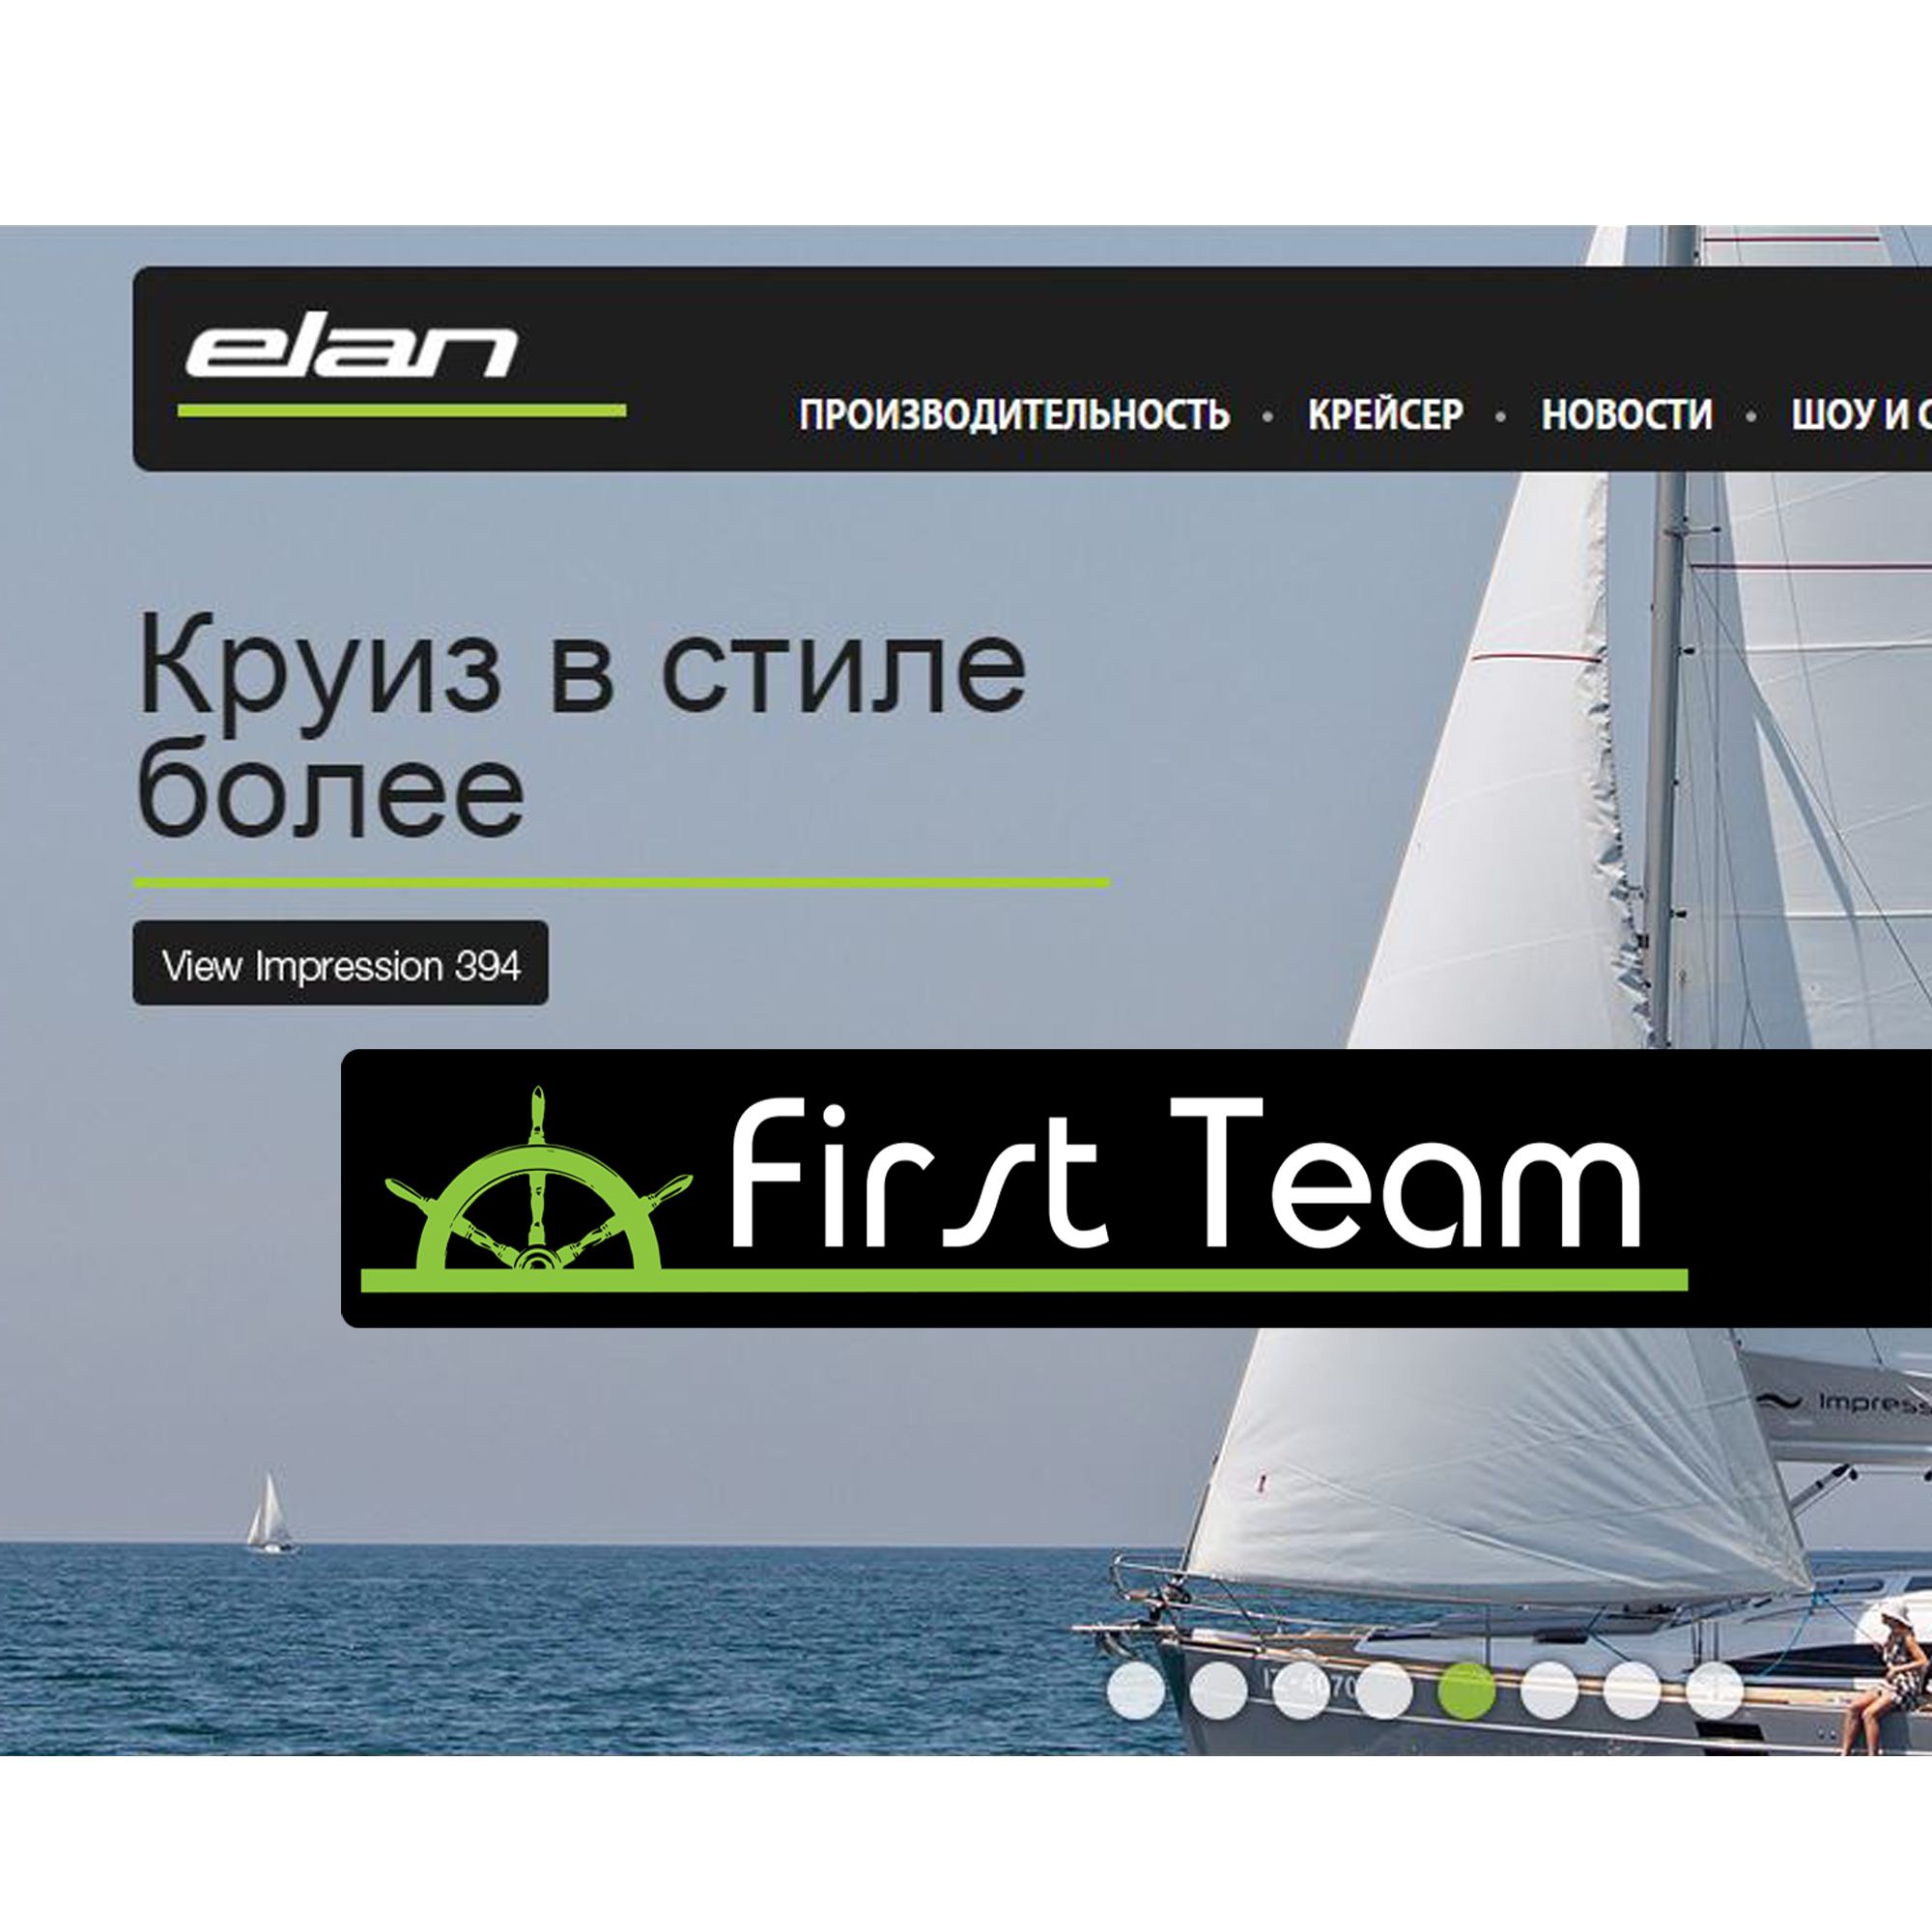 Логотип для продавца яхт - компании First Team - дизайнер atmannn